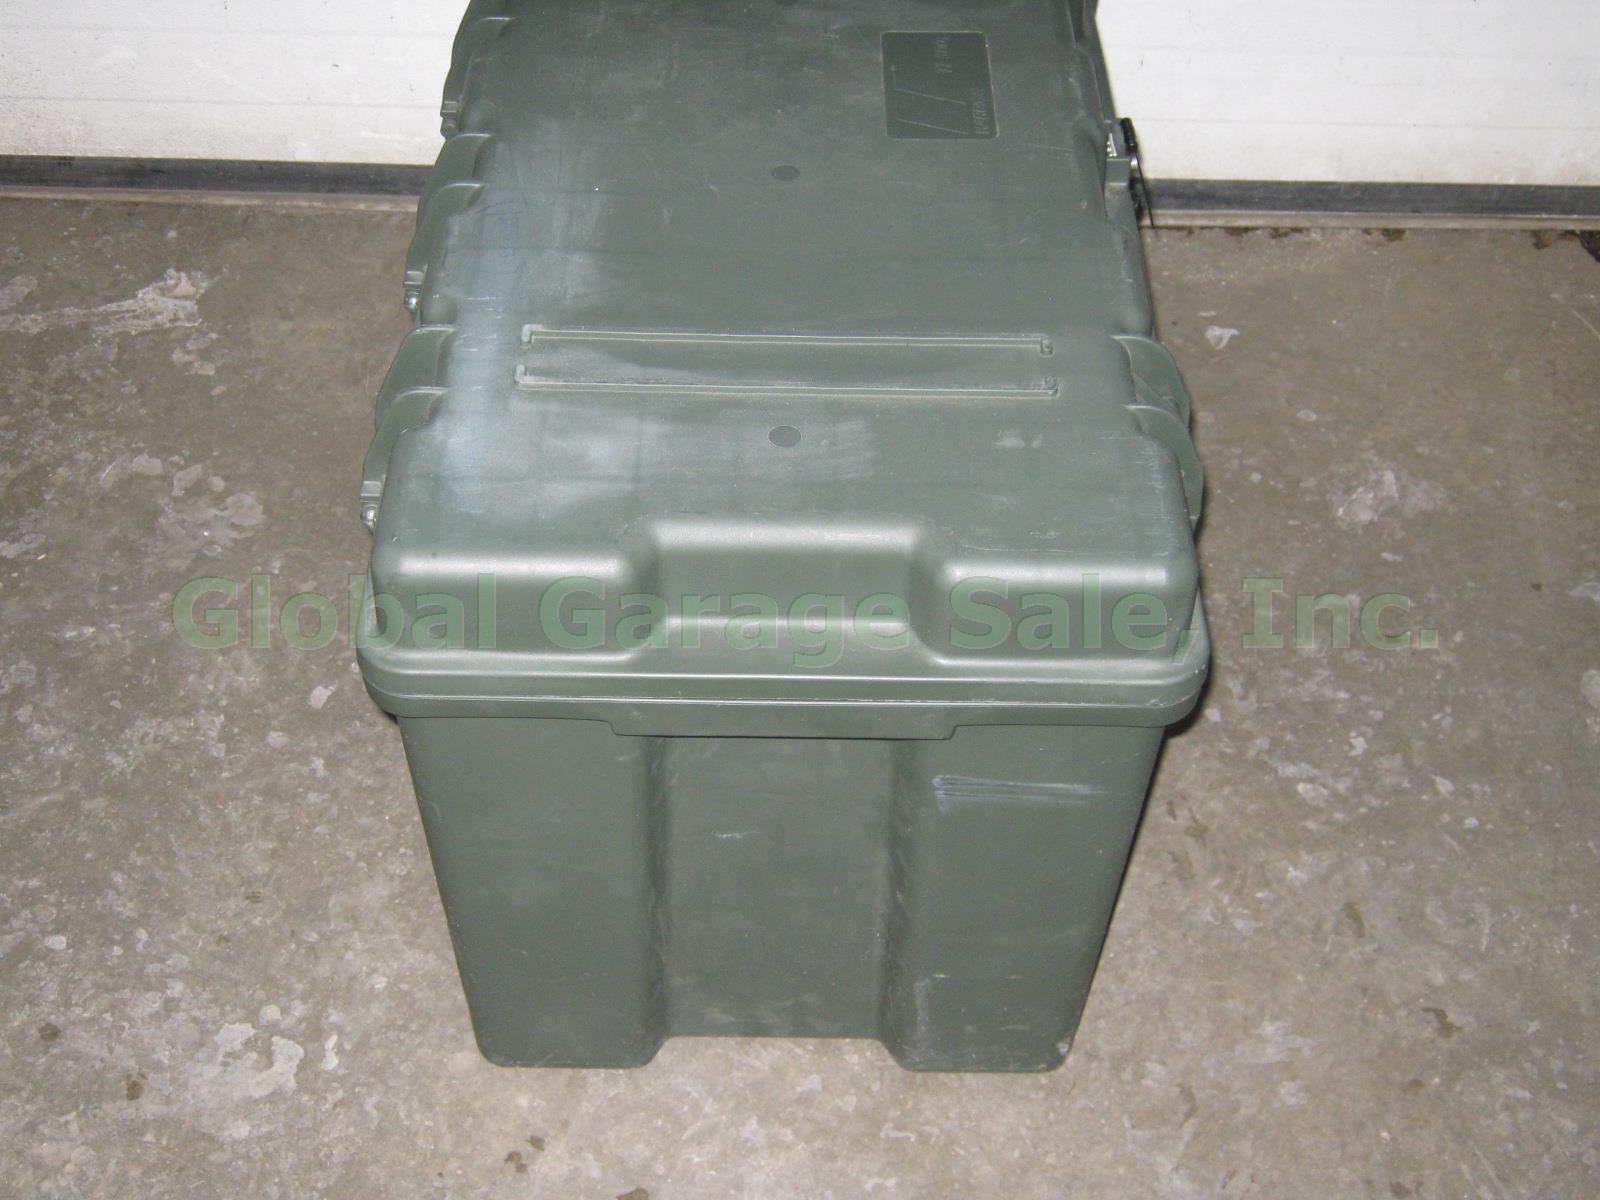 Pelican Hardigg TL 500i Tuff Box Army Military Storage Trunk Green Foot Locker 5